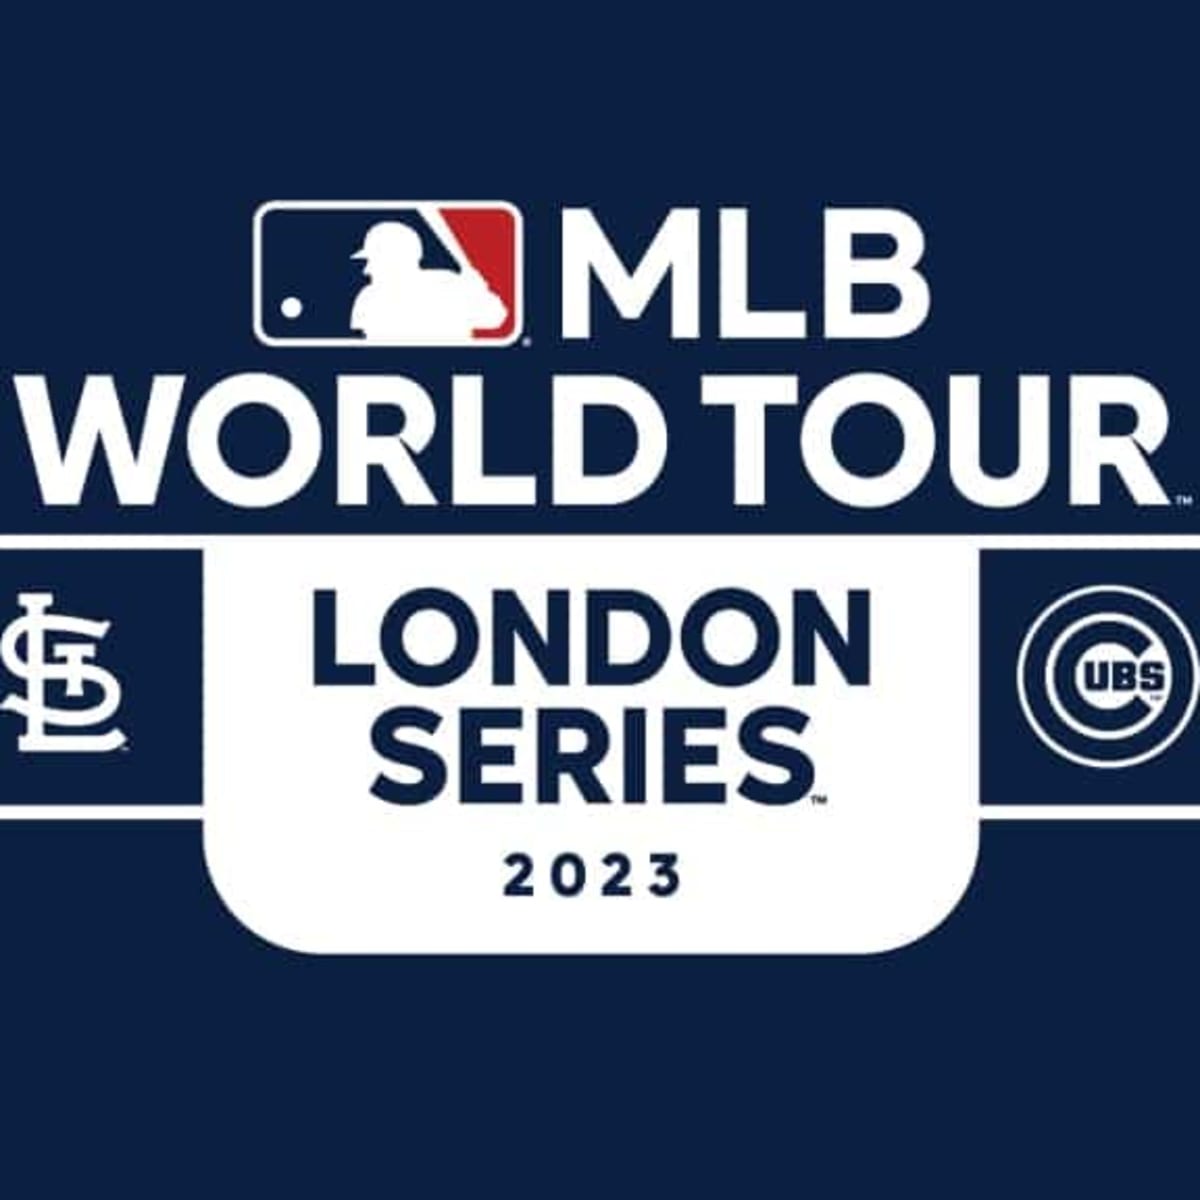 Chicago Cubs vs St Louis Cardinals 2023 MLB World Tour London